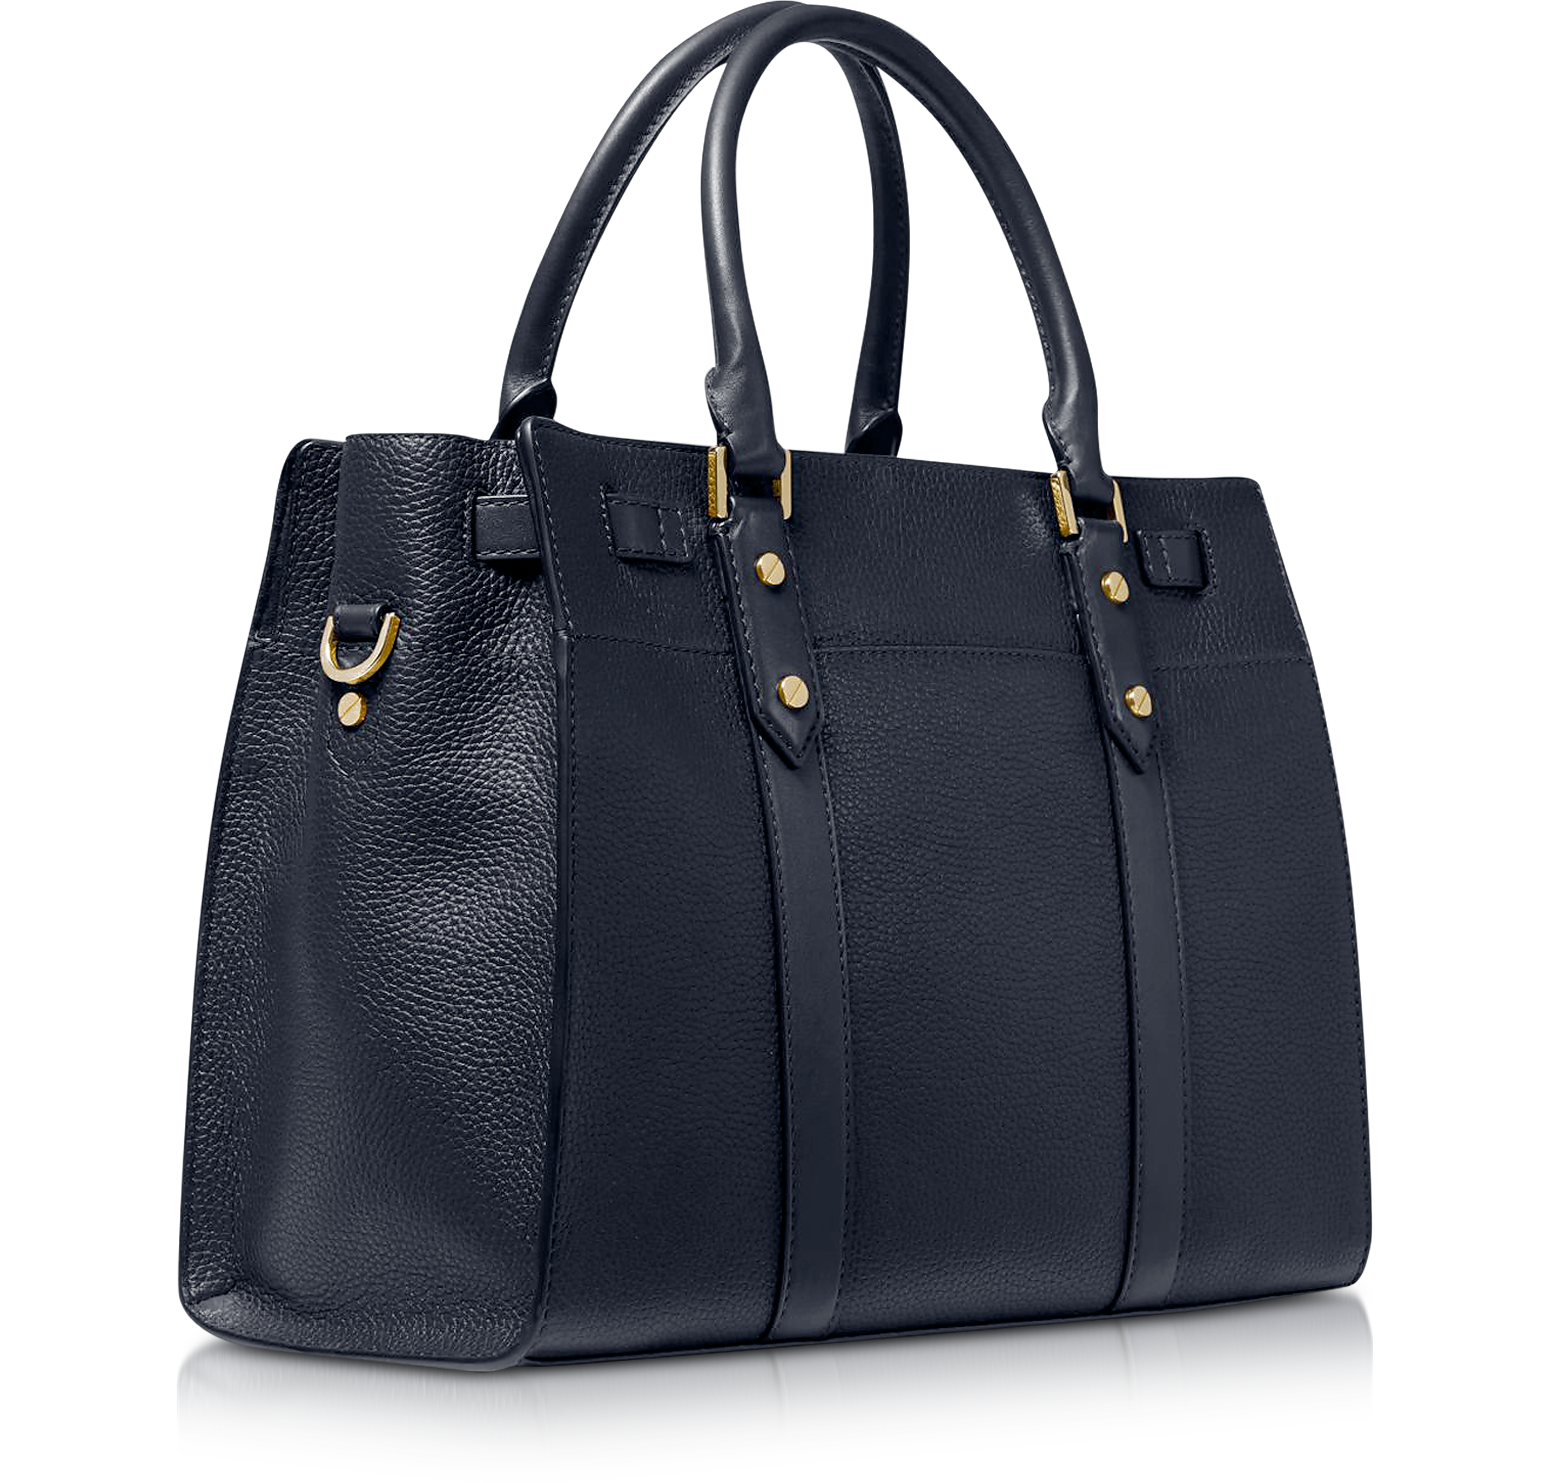 Michael Kors Pouch GRAY Handbag Great Condition (LZ) 144010008915